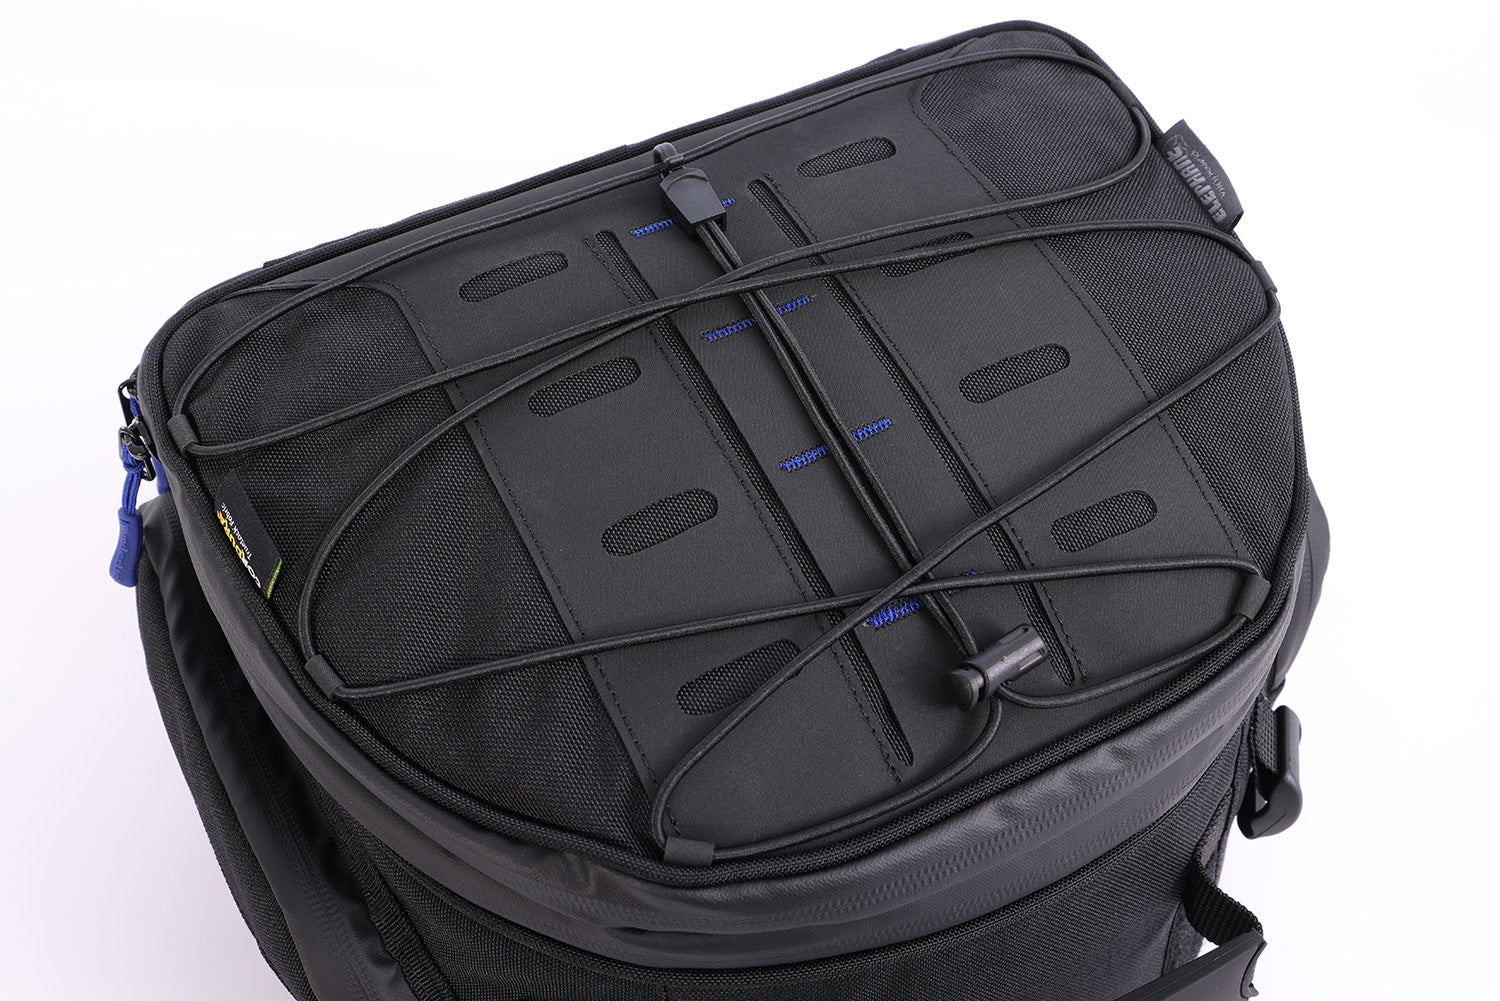 Wunderlich ELEPHANT seat and luggage rack bag - black